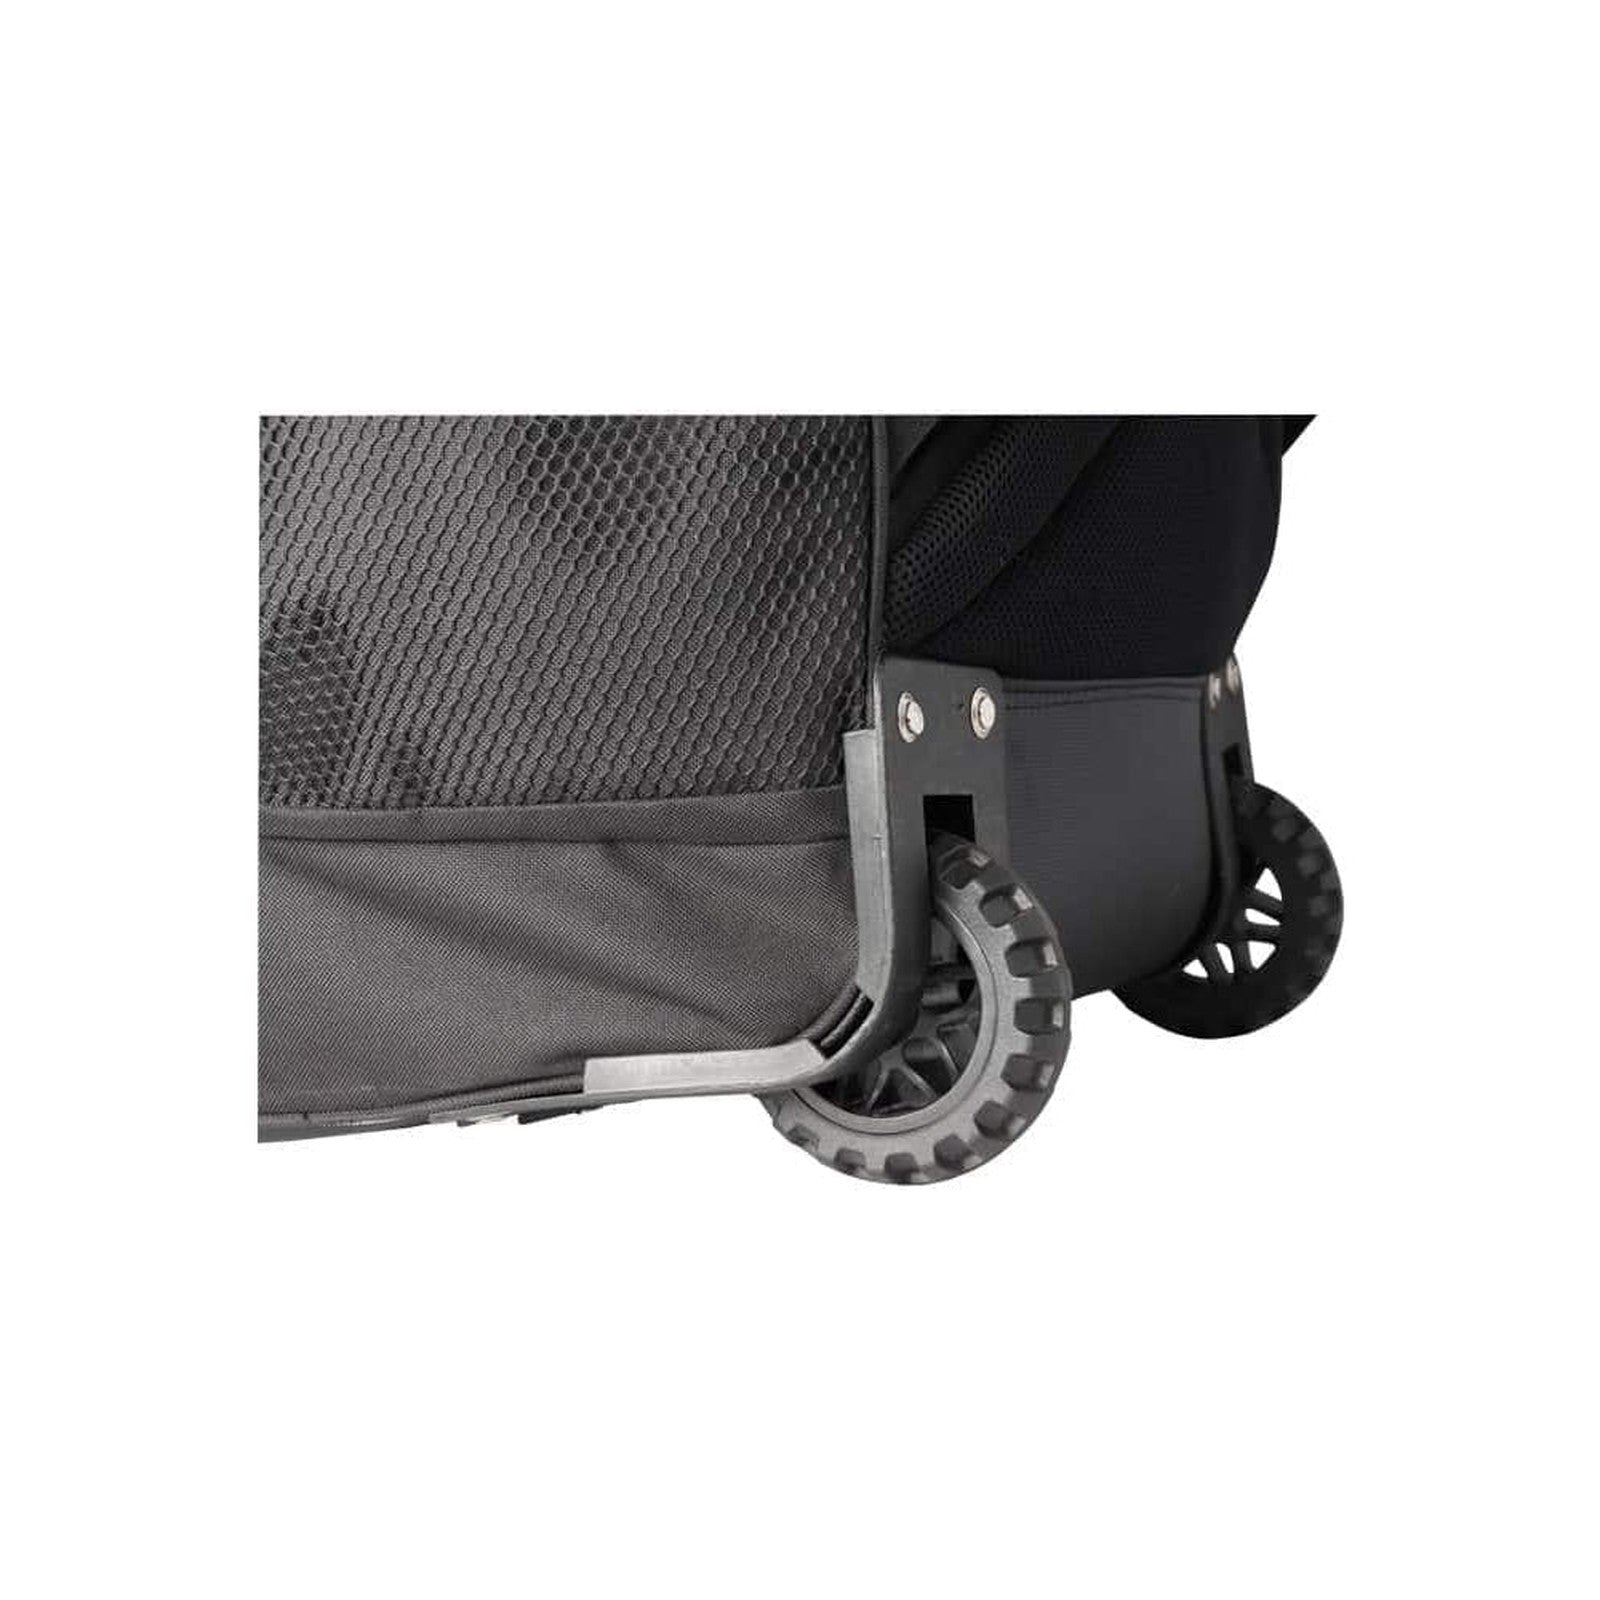 Shrey Elite Duffle Wheel Cricket Kit Bag